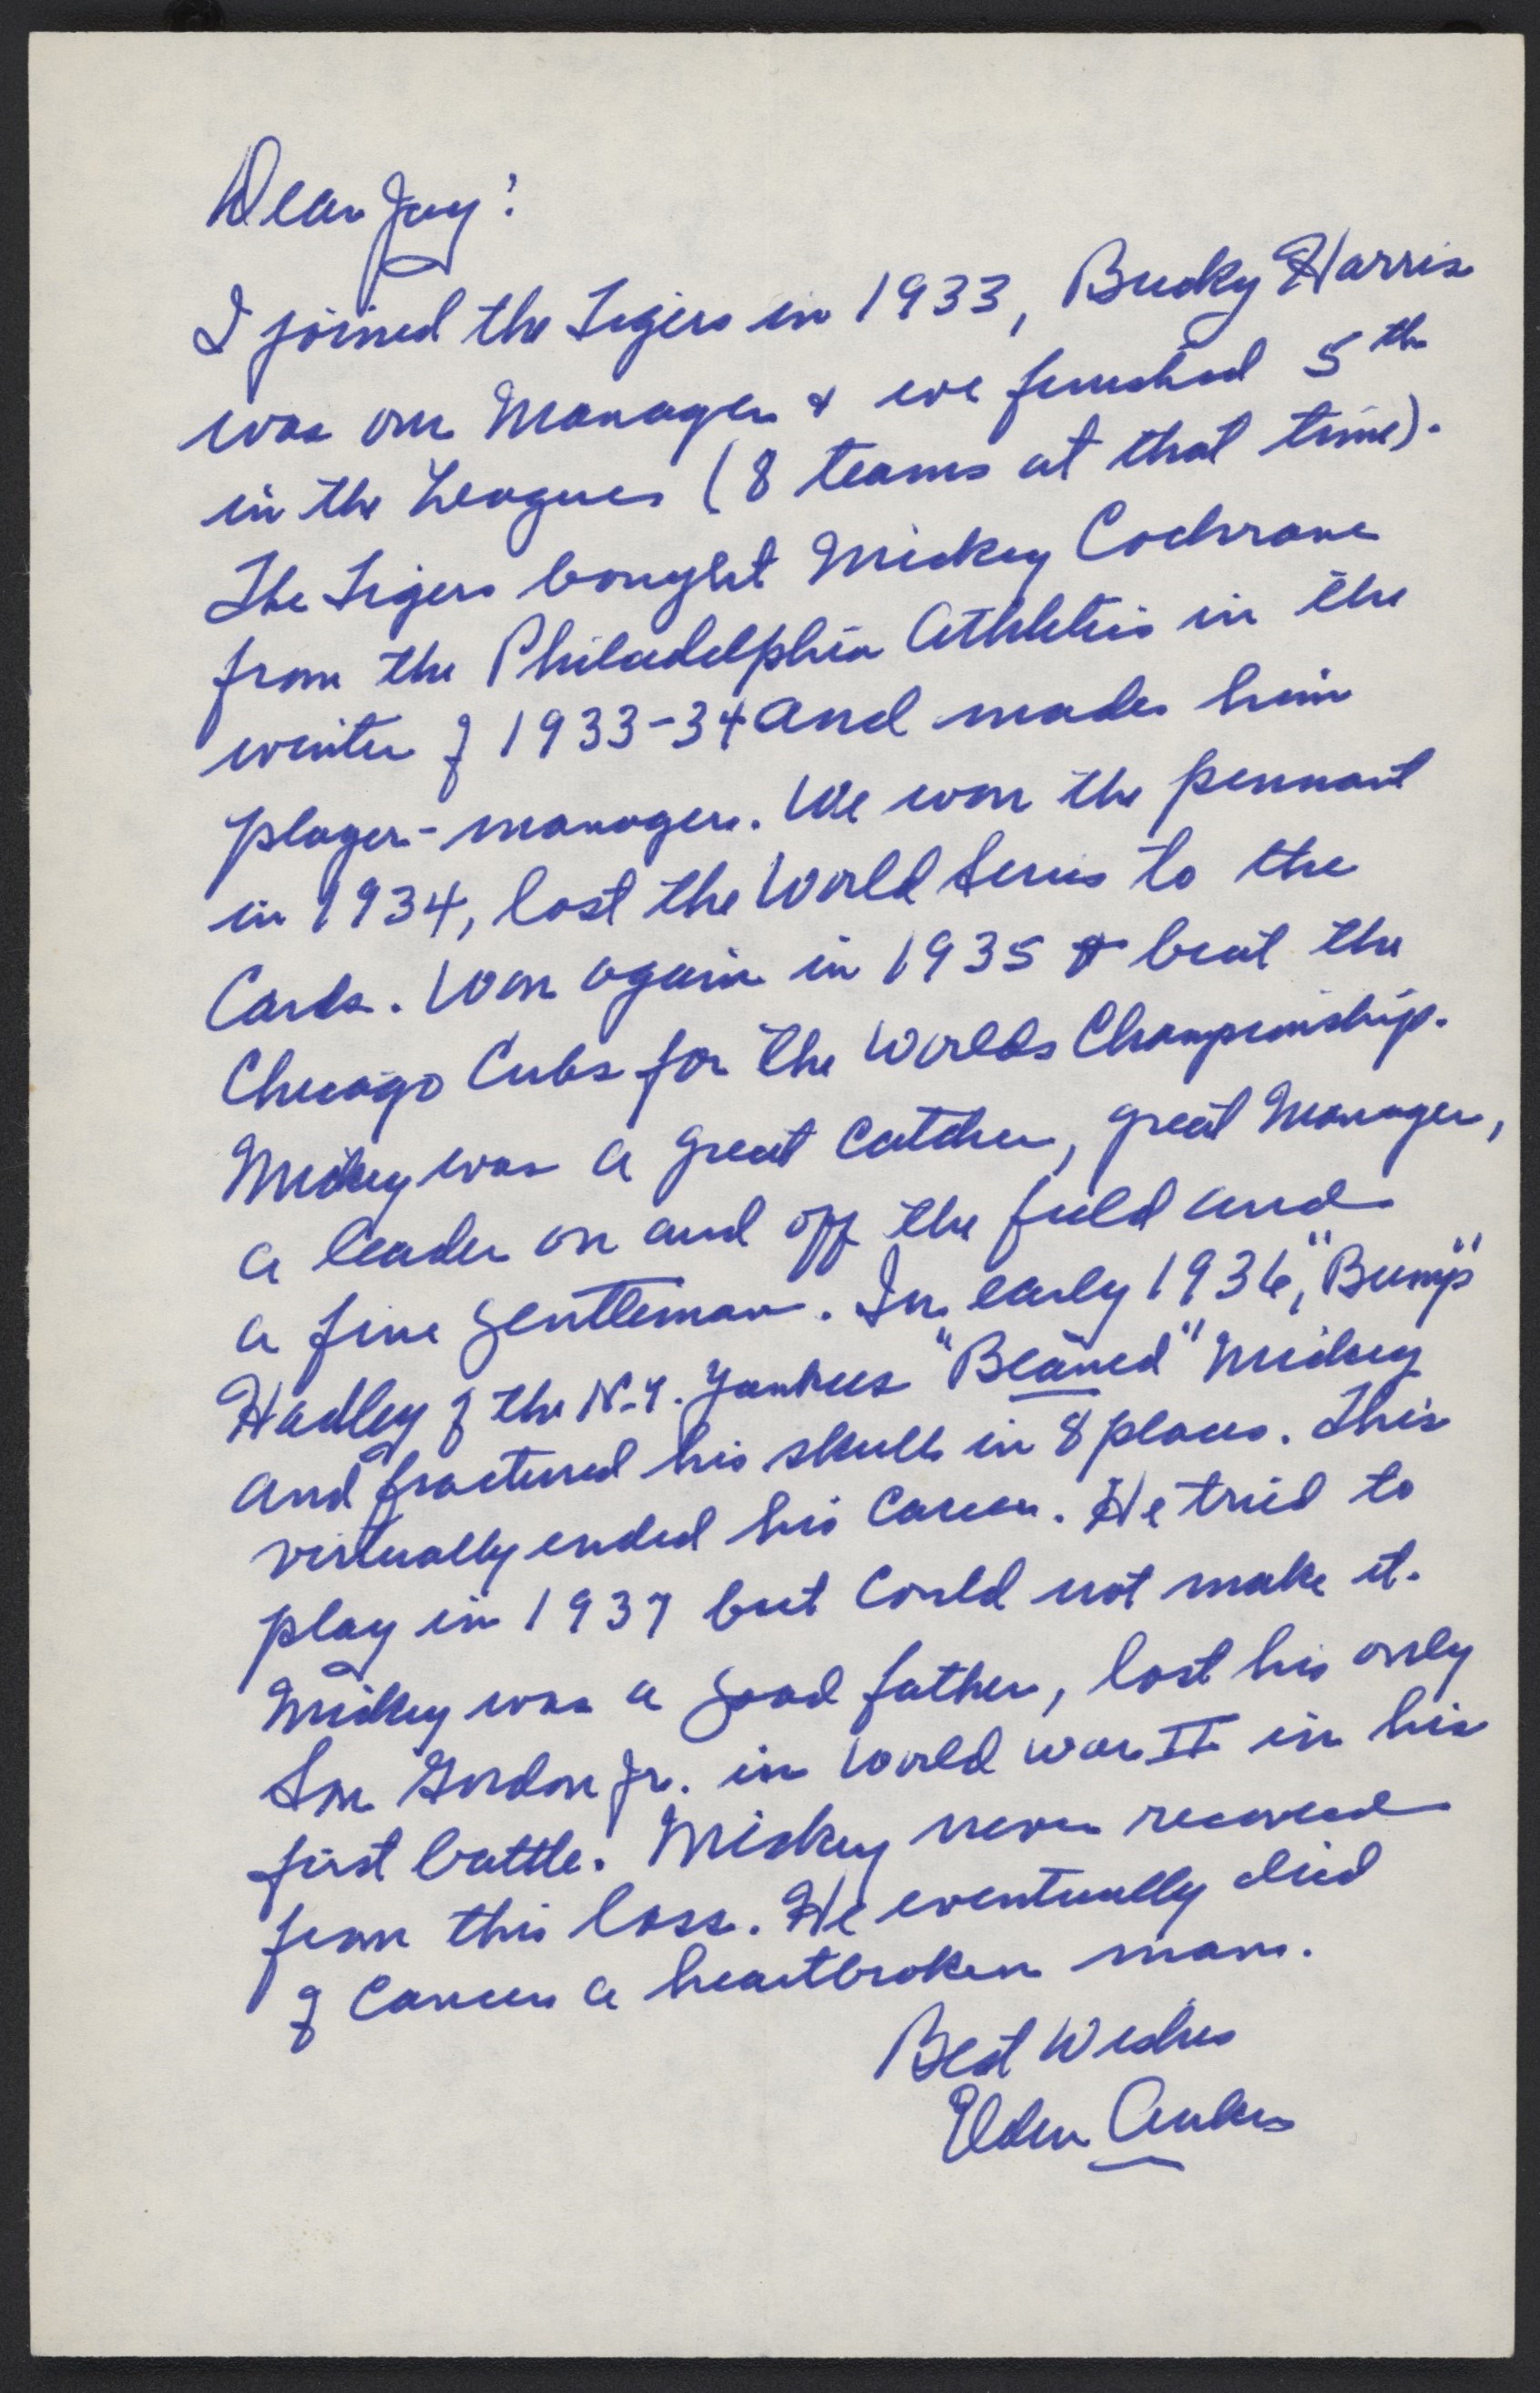 Ty Cobb and Detroit Tigers - Elden Auker Handwritten Letter w/Glowing Mickey Cochrane Content